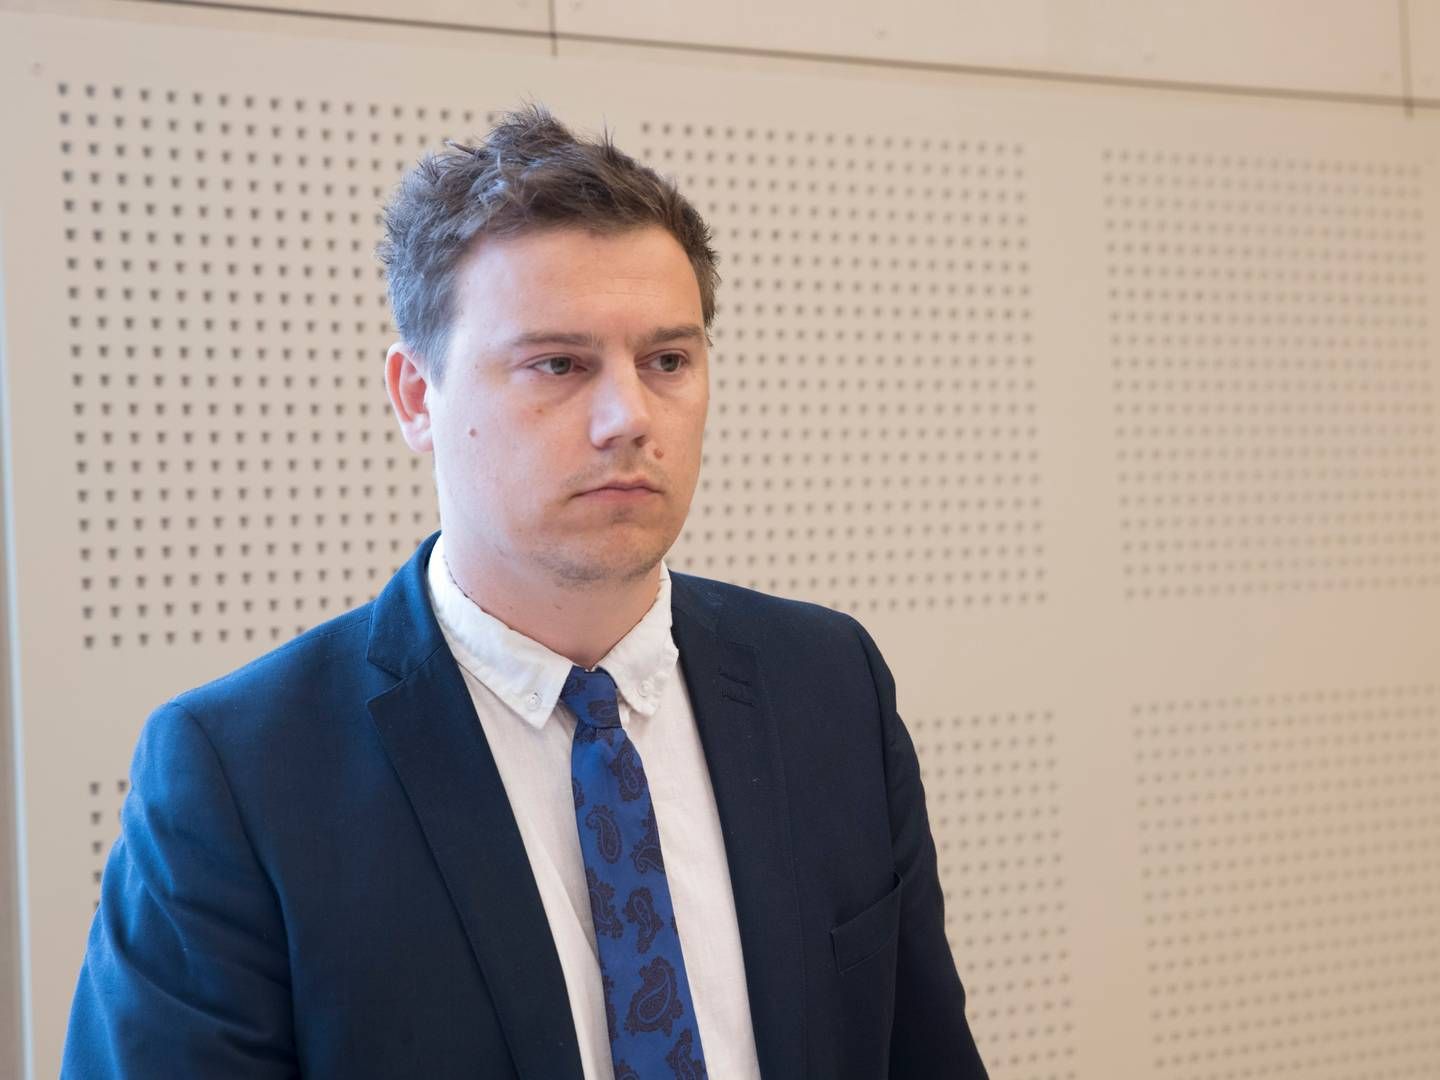 UENIG MED REGJERINGEN: Advokat Sindre Løvgaard er kritisk til regjeringens tingrett-forslag. | Foto: Terje Bendiksby / NTB